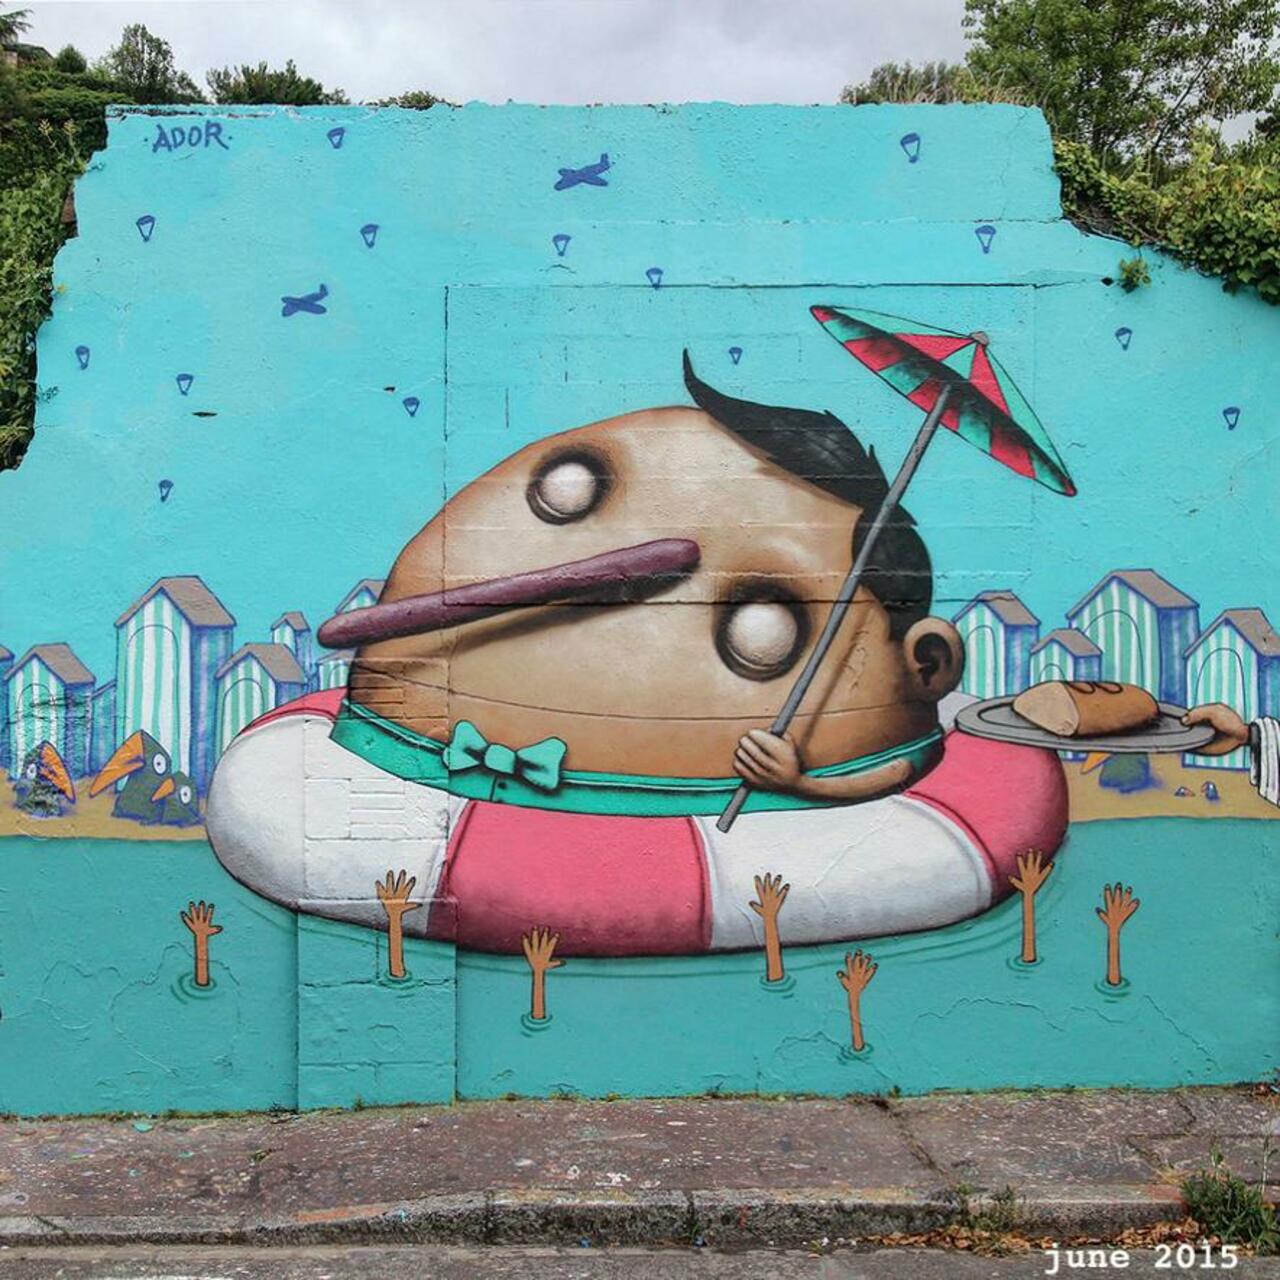 RT @StreetArt_Graf: "Summer" by Ador in France (http://globalstreetart.com/ador)
Via @globalstreetart 
#streetart #urbanart #mural #art #graffiti http://t.co/KPp5PENNZD